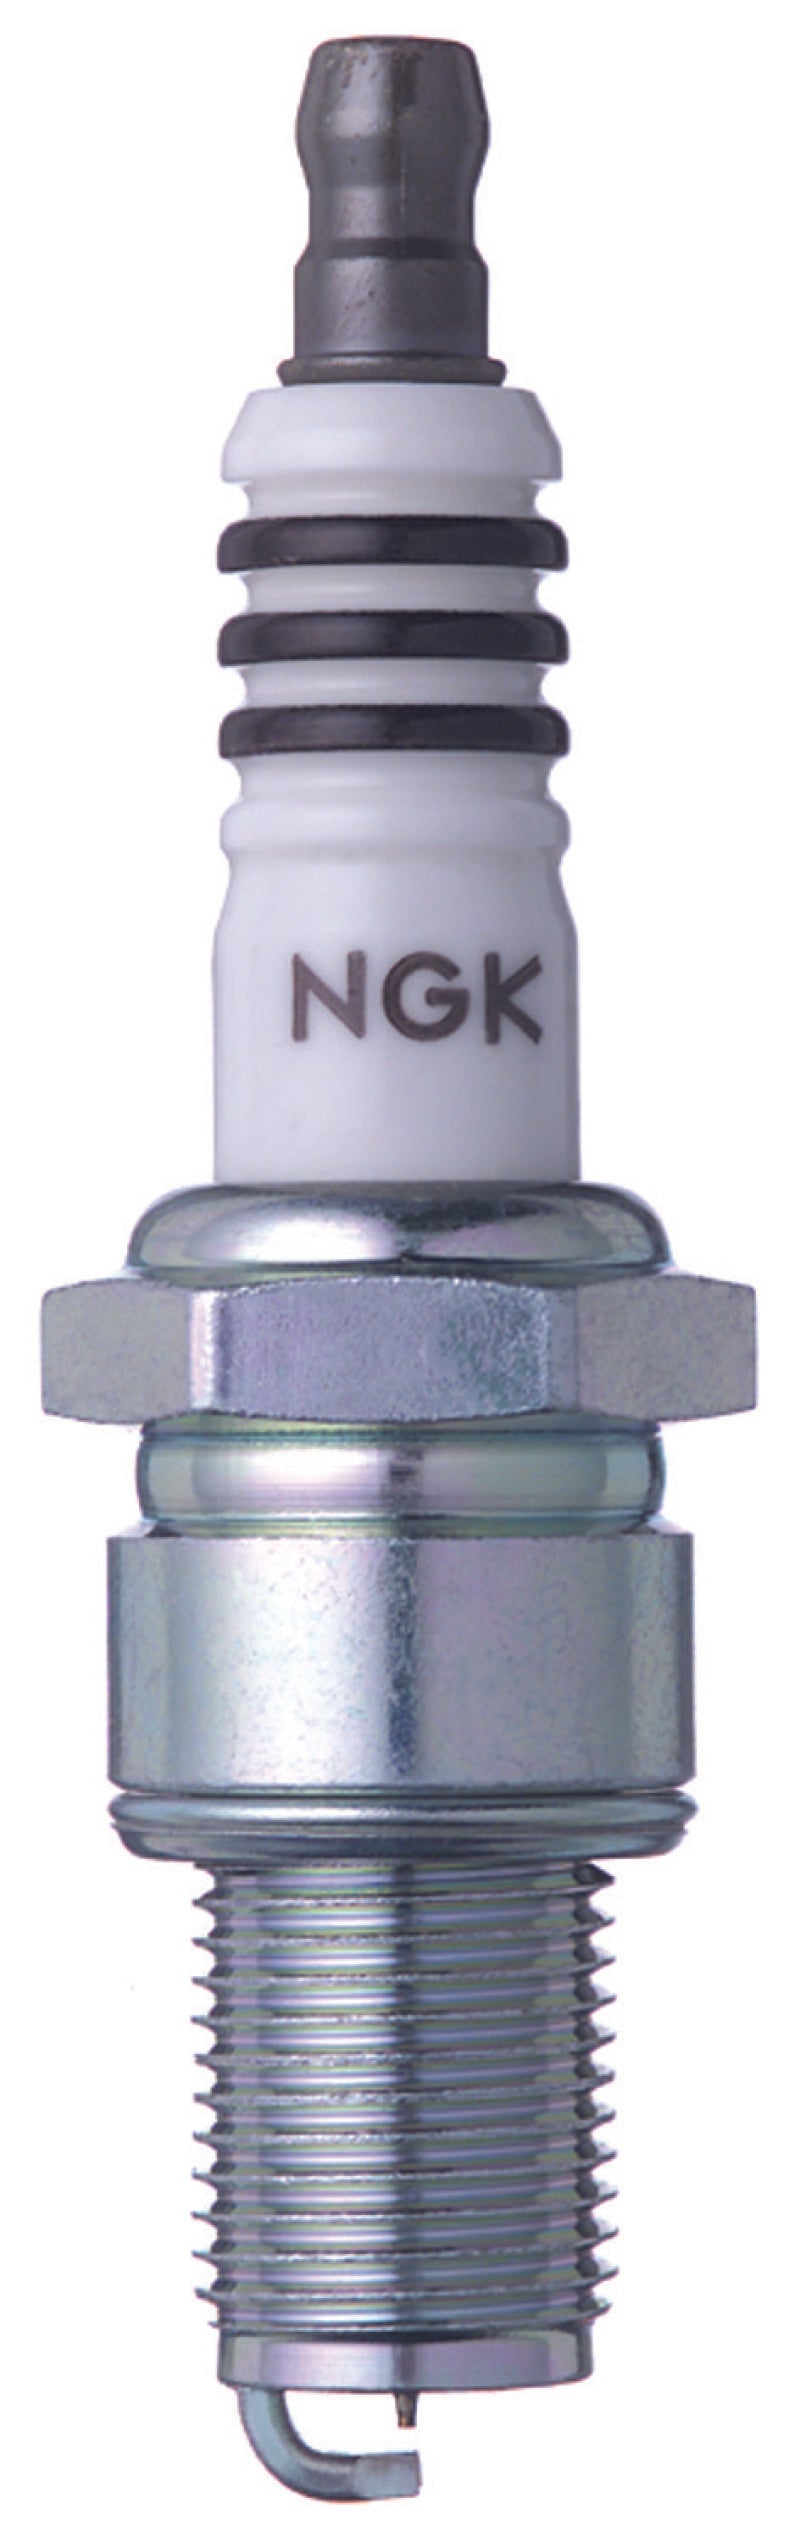 NGK Iridium IX Spark Plug Box of 4 (BR8EIX SOLID) -  Shop now at Performance Car Parts